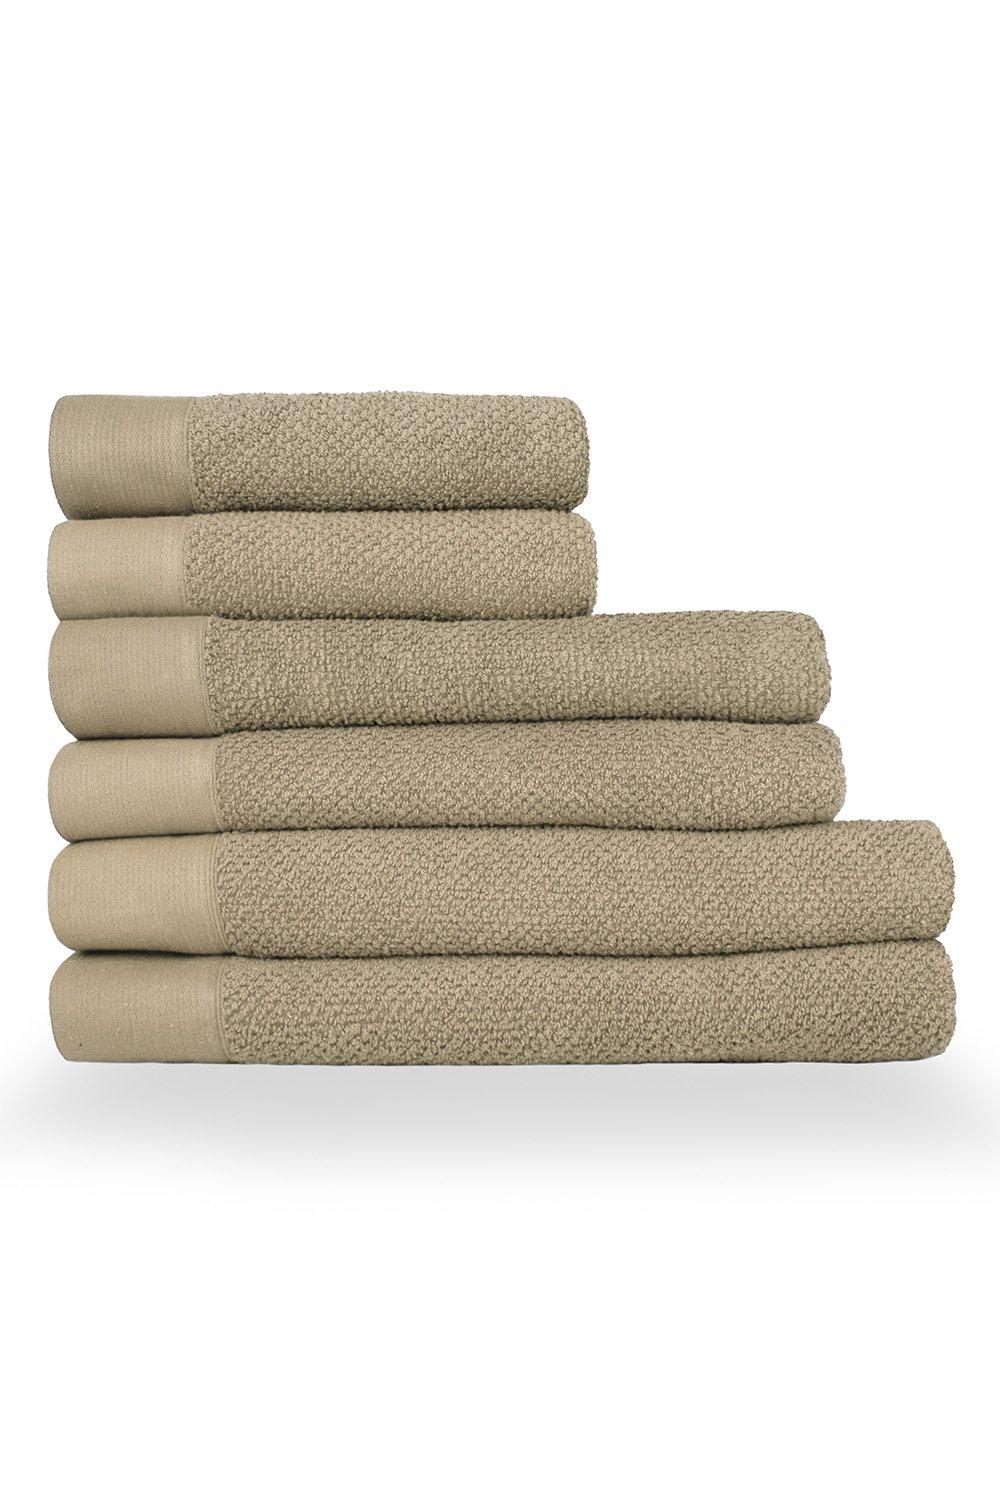 Textured Weave Oxford Panel Cotton 6-Piece Hand/Bath/Sheet Towel Bale